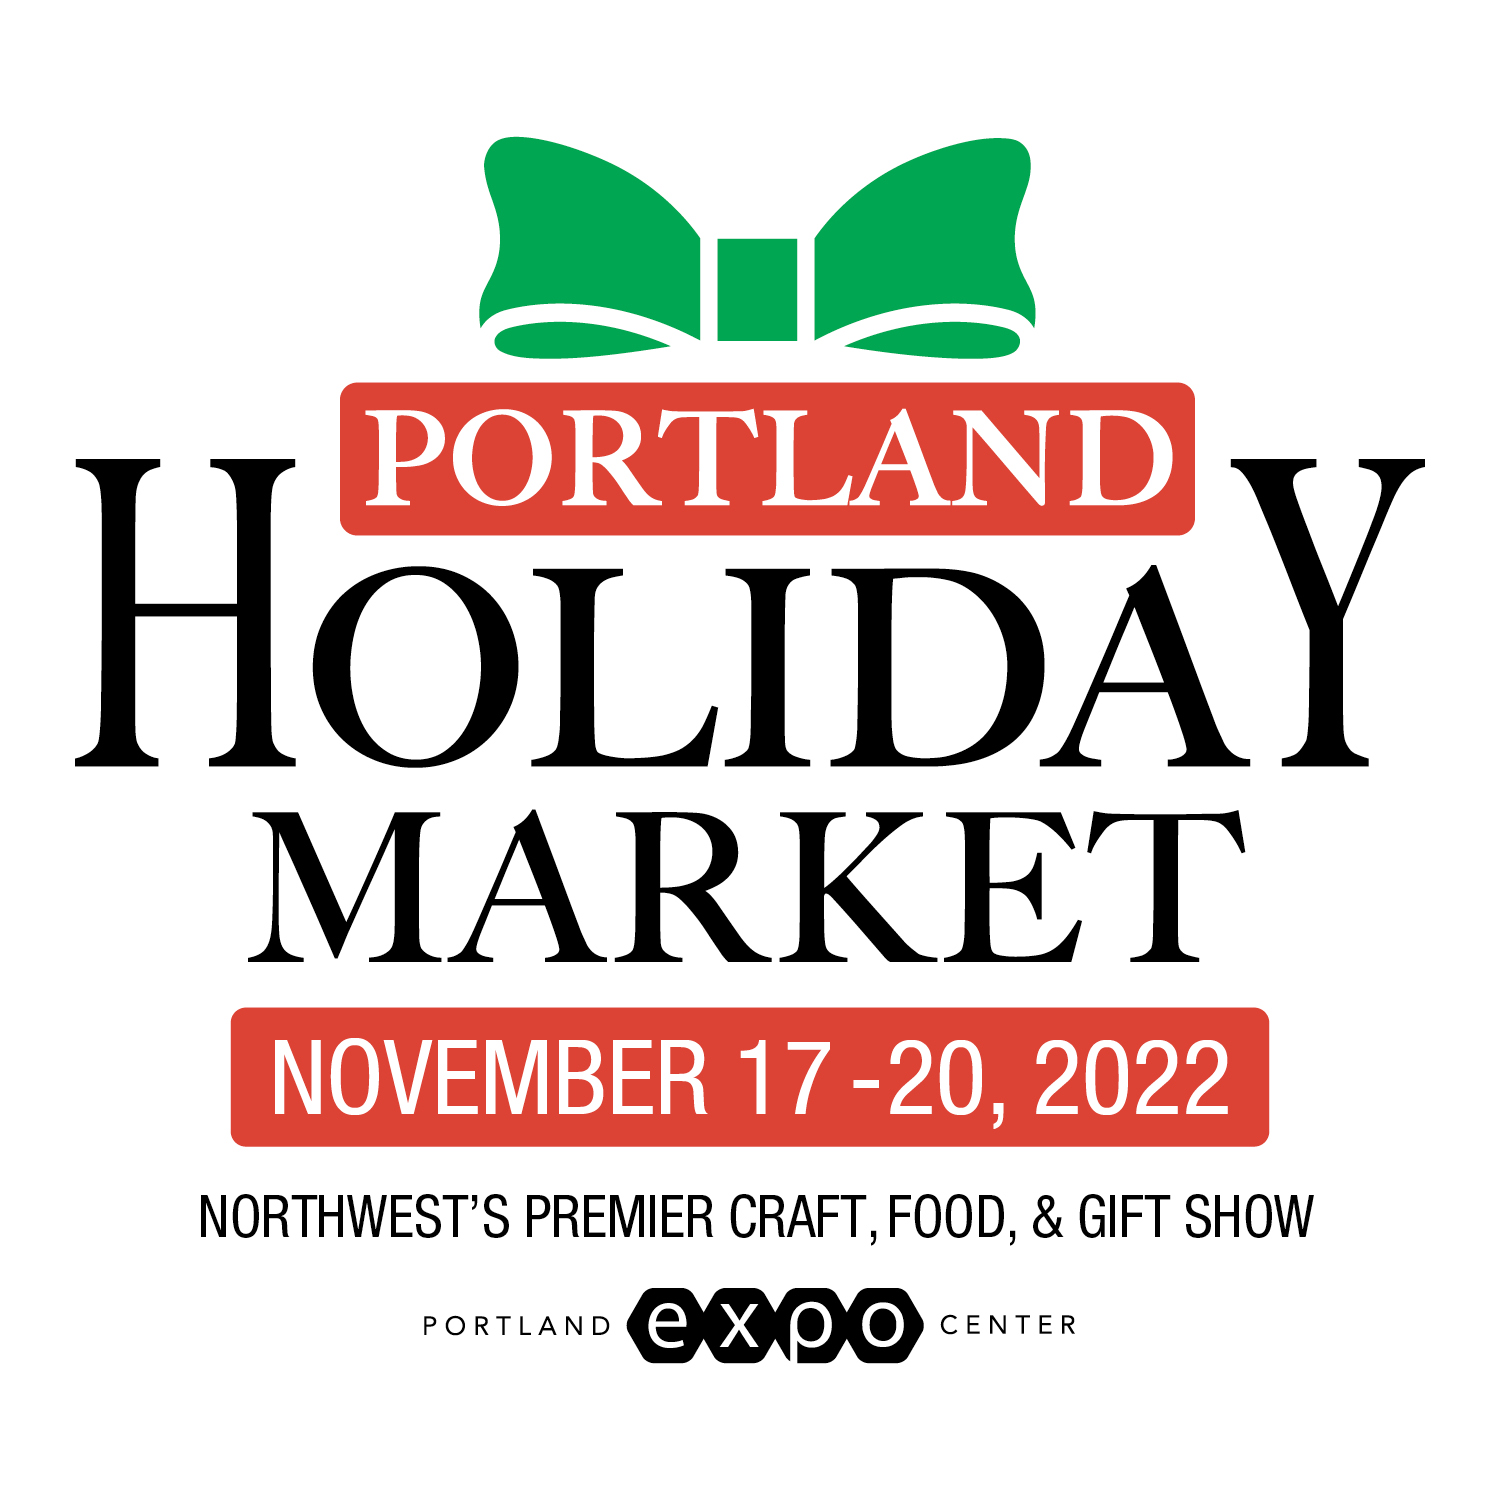 Portland Holiday Market Events